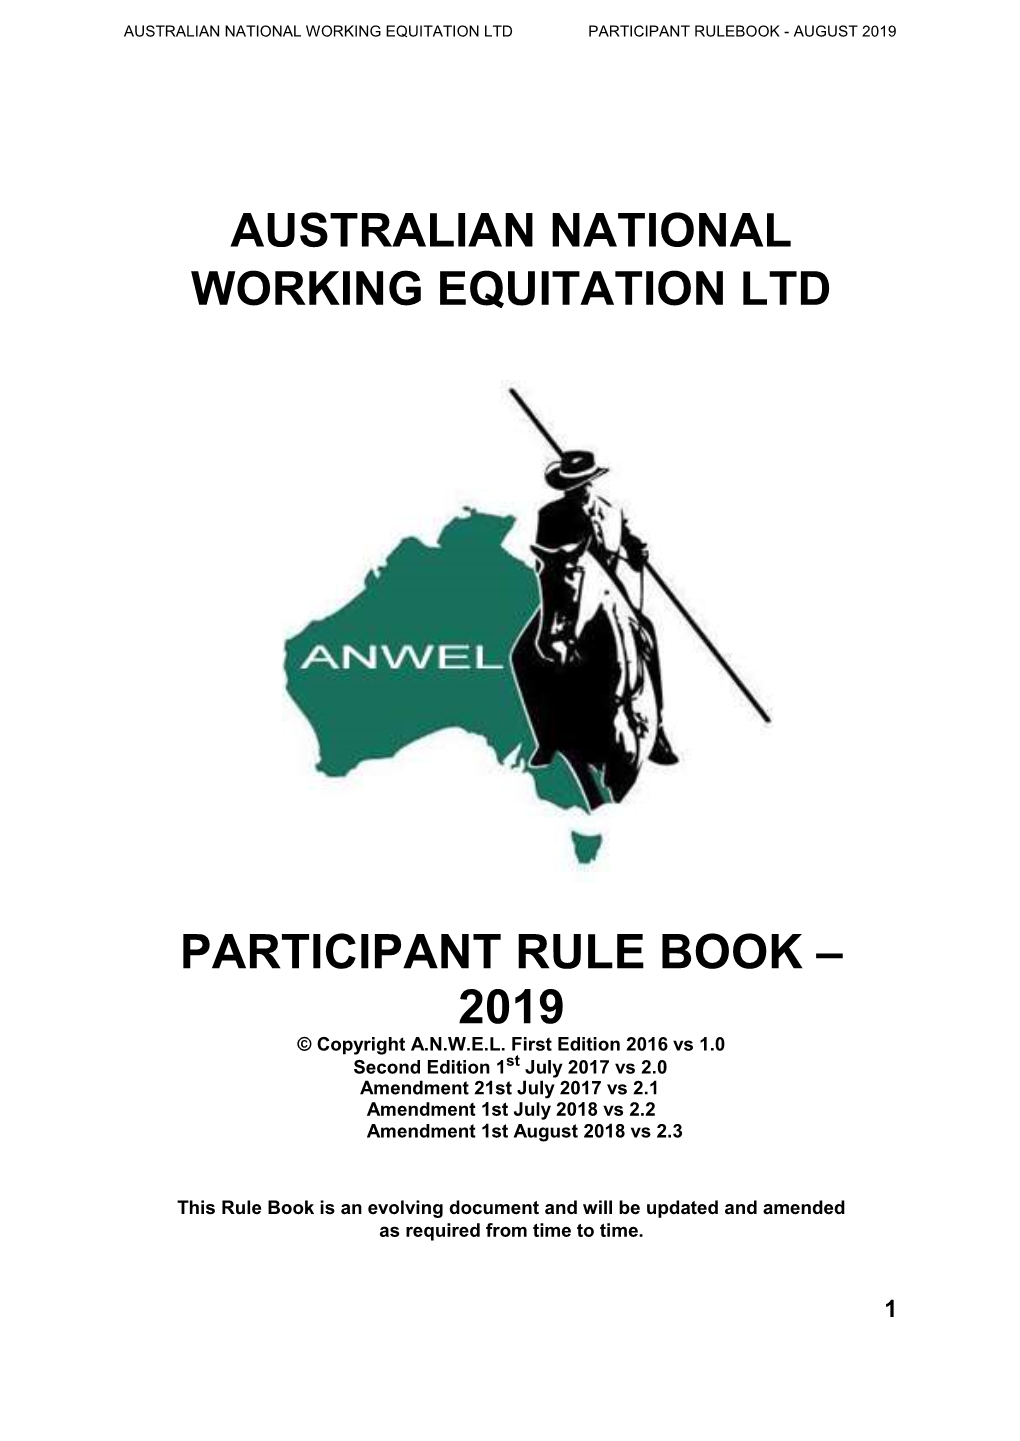 Australian National Working Equitation Ltd Participant Rulebook - August 2019